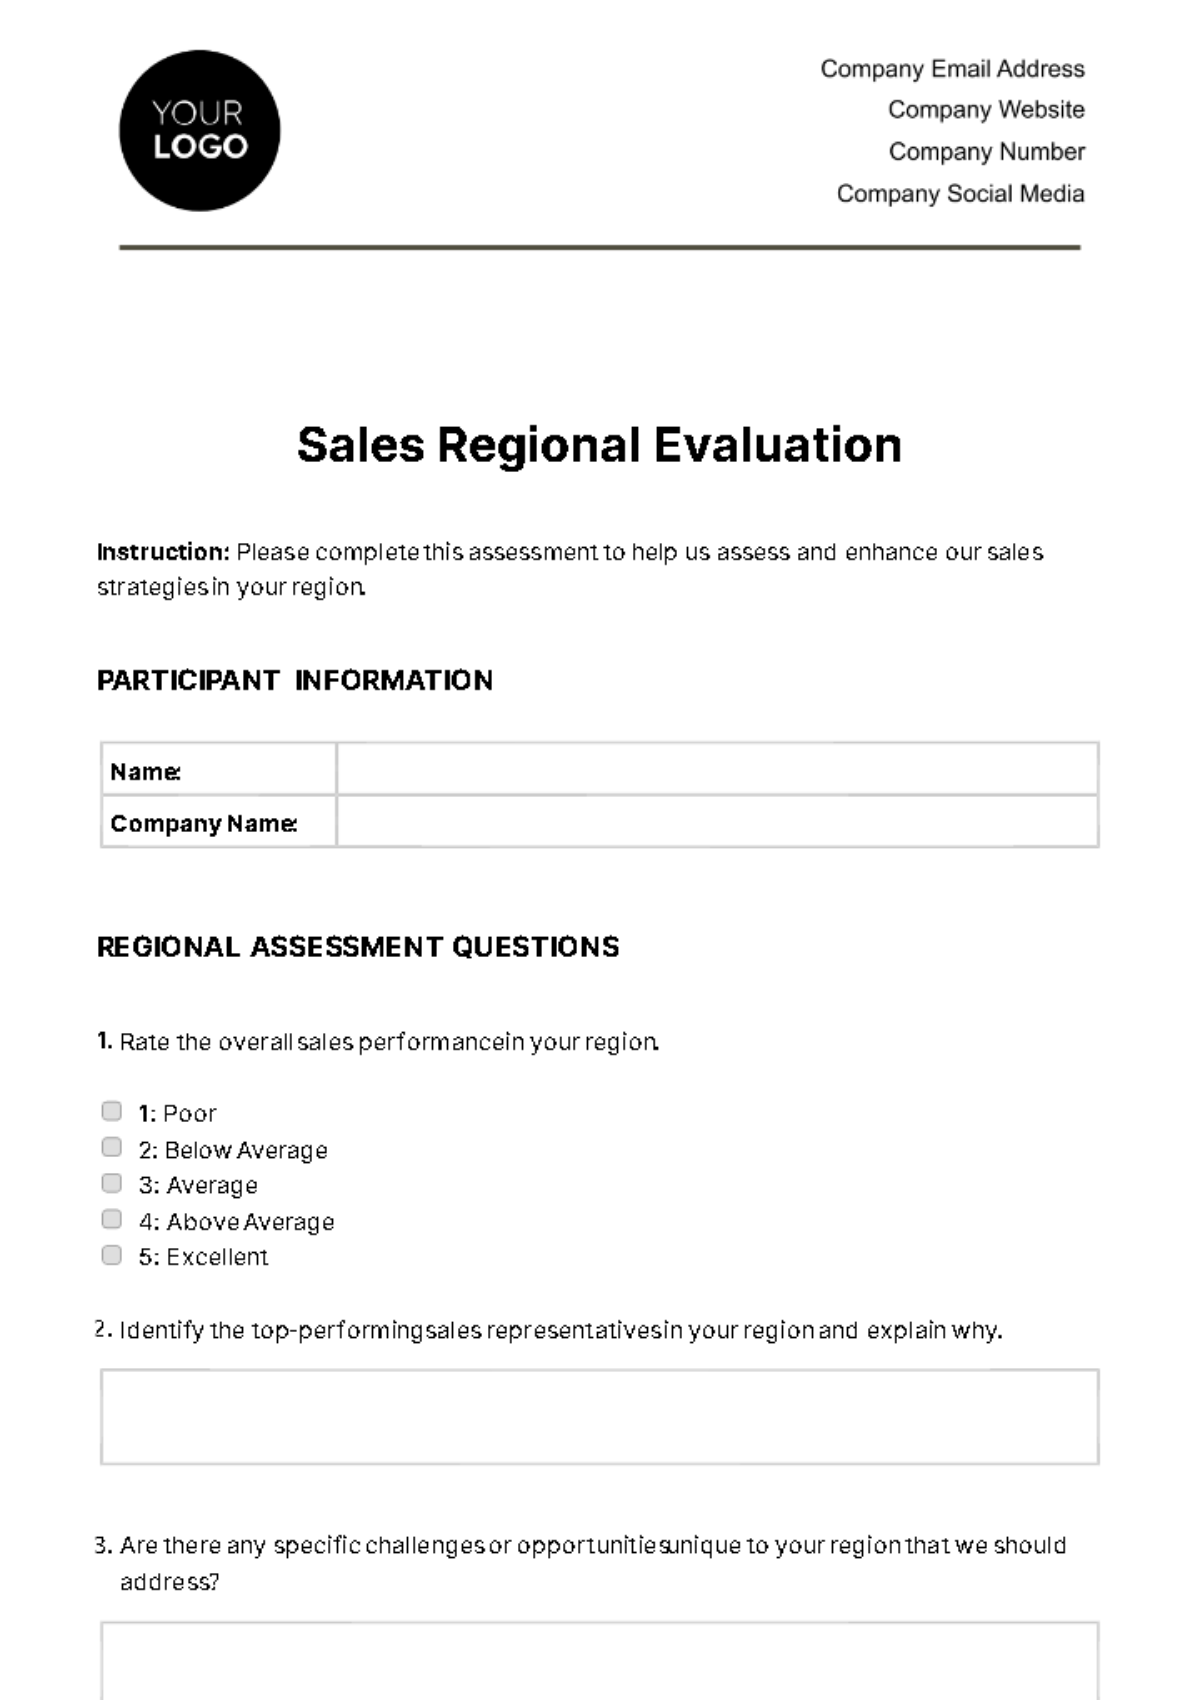 Sales Regional Evaluation Template